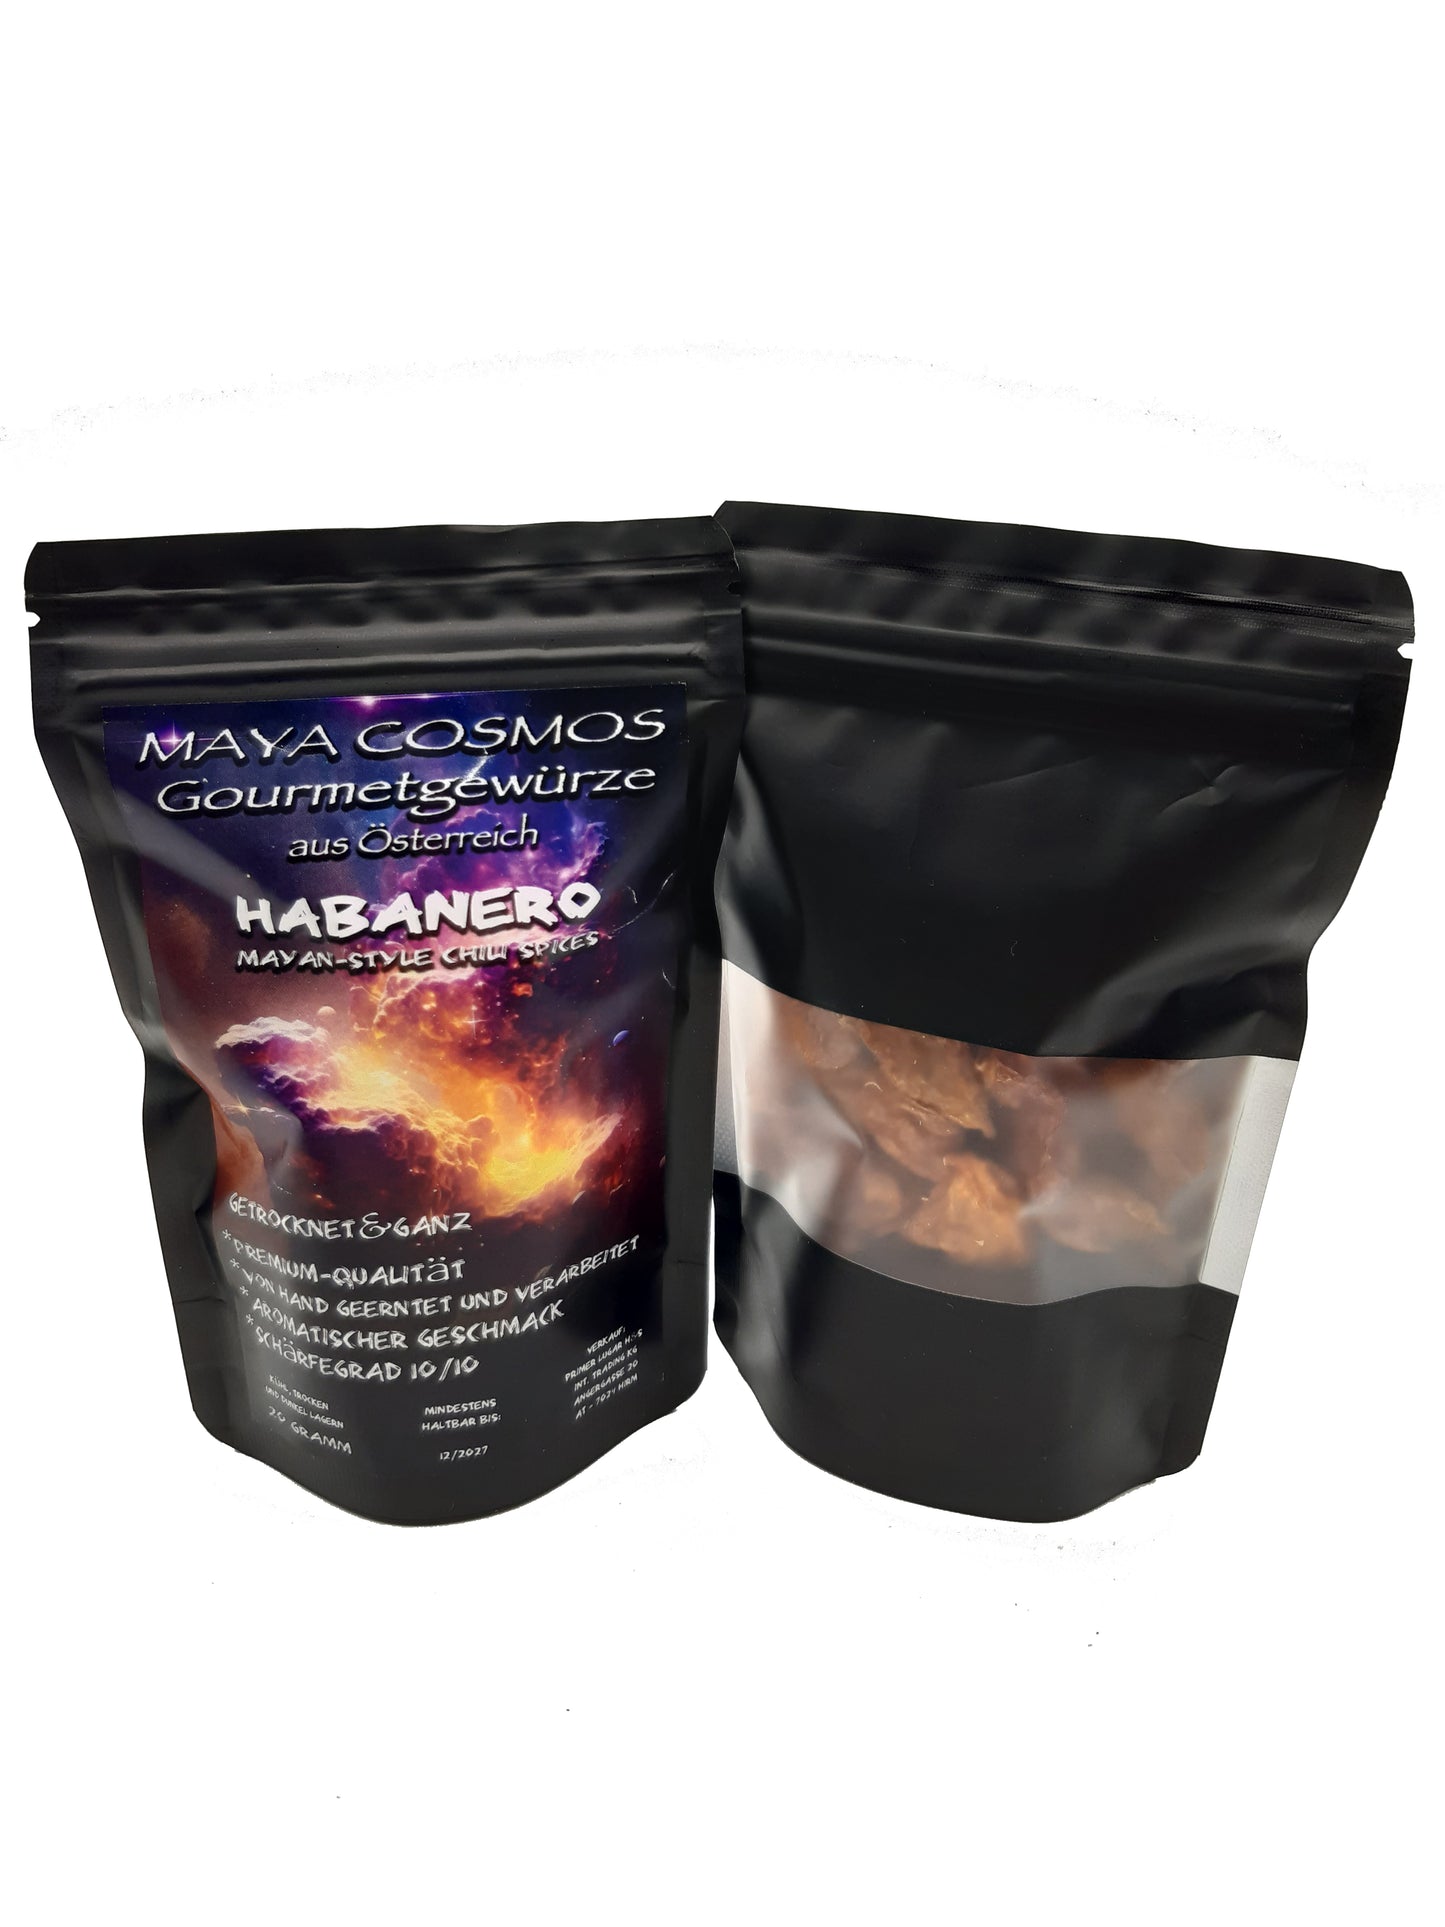 Habanero Chili 20g - Maya Cosmos gourmet spices from Austria